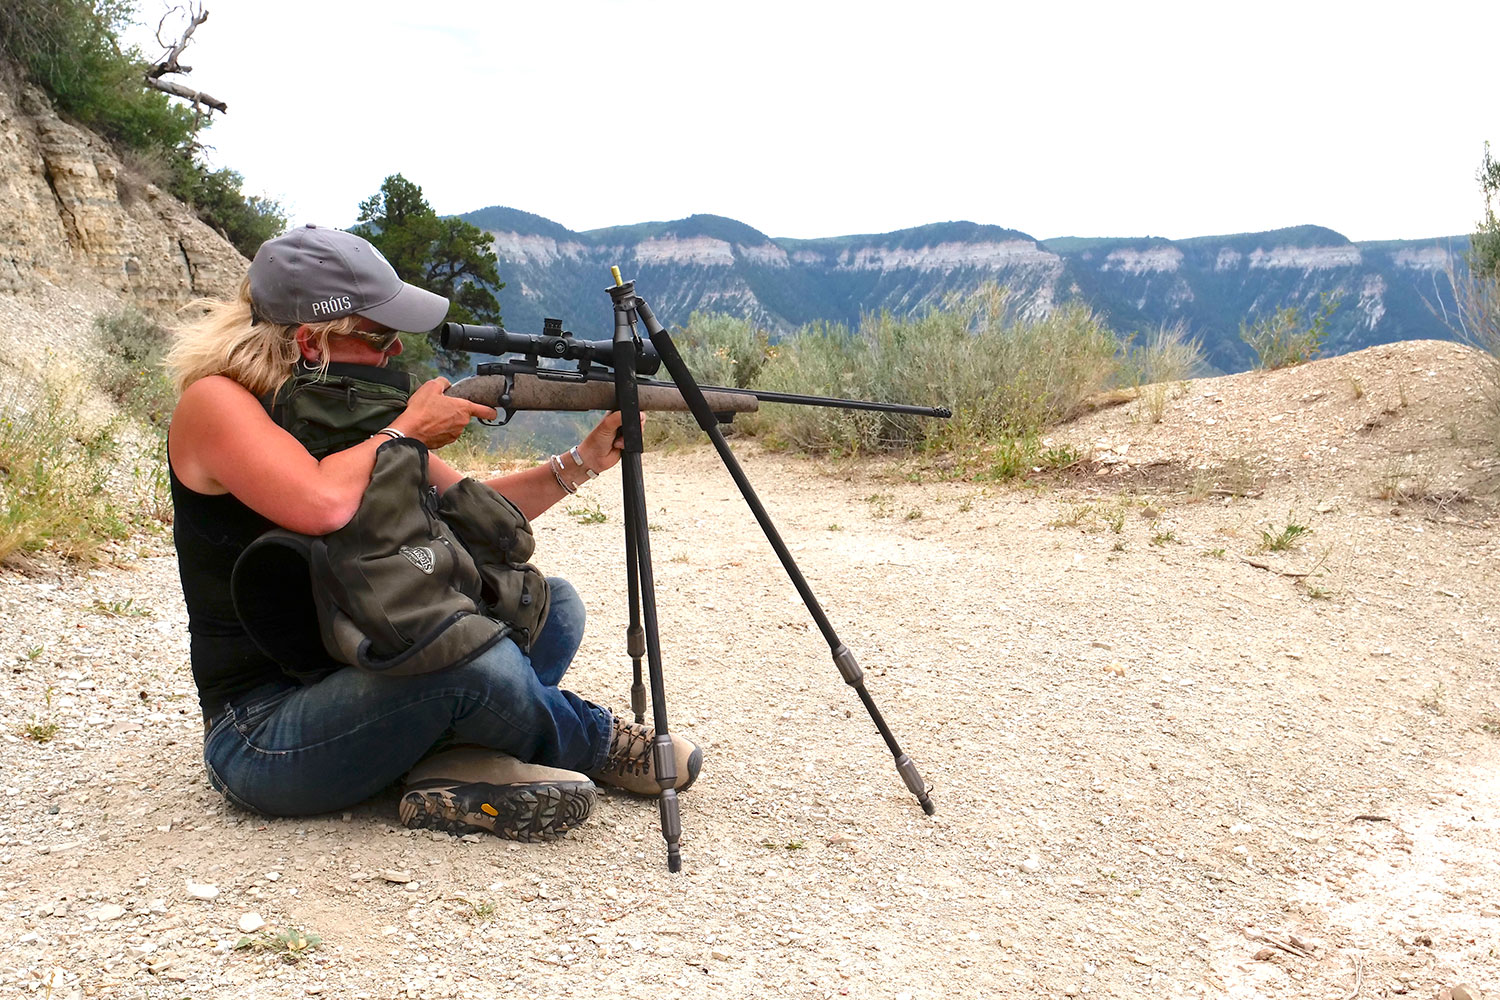 A woman using a tripod to aim a rifle.